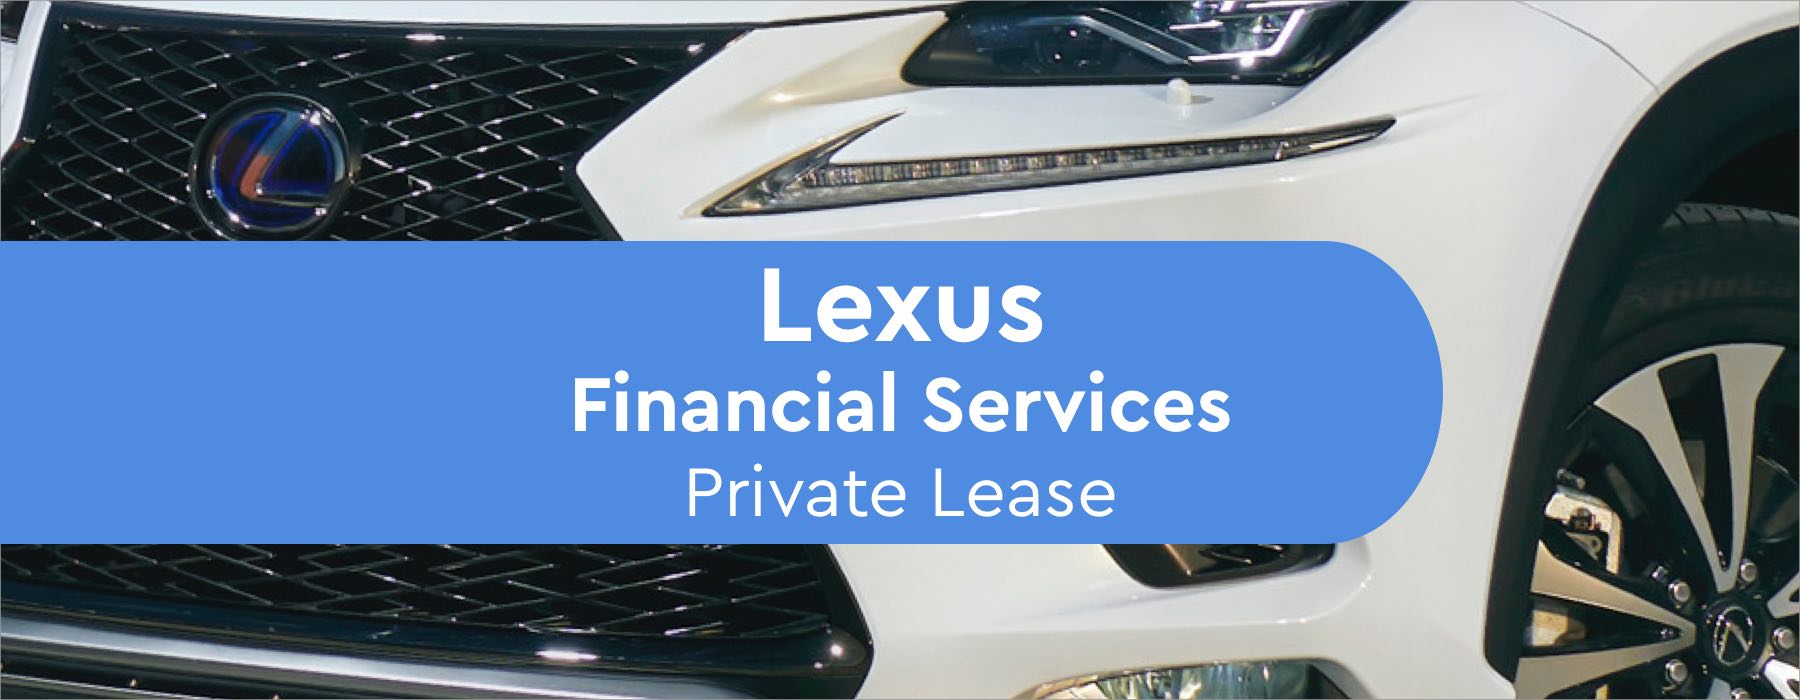 Lexus financial services Private Lease